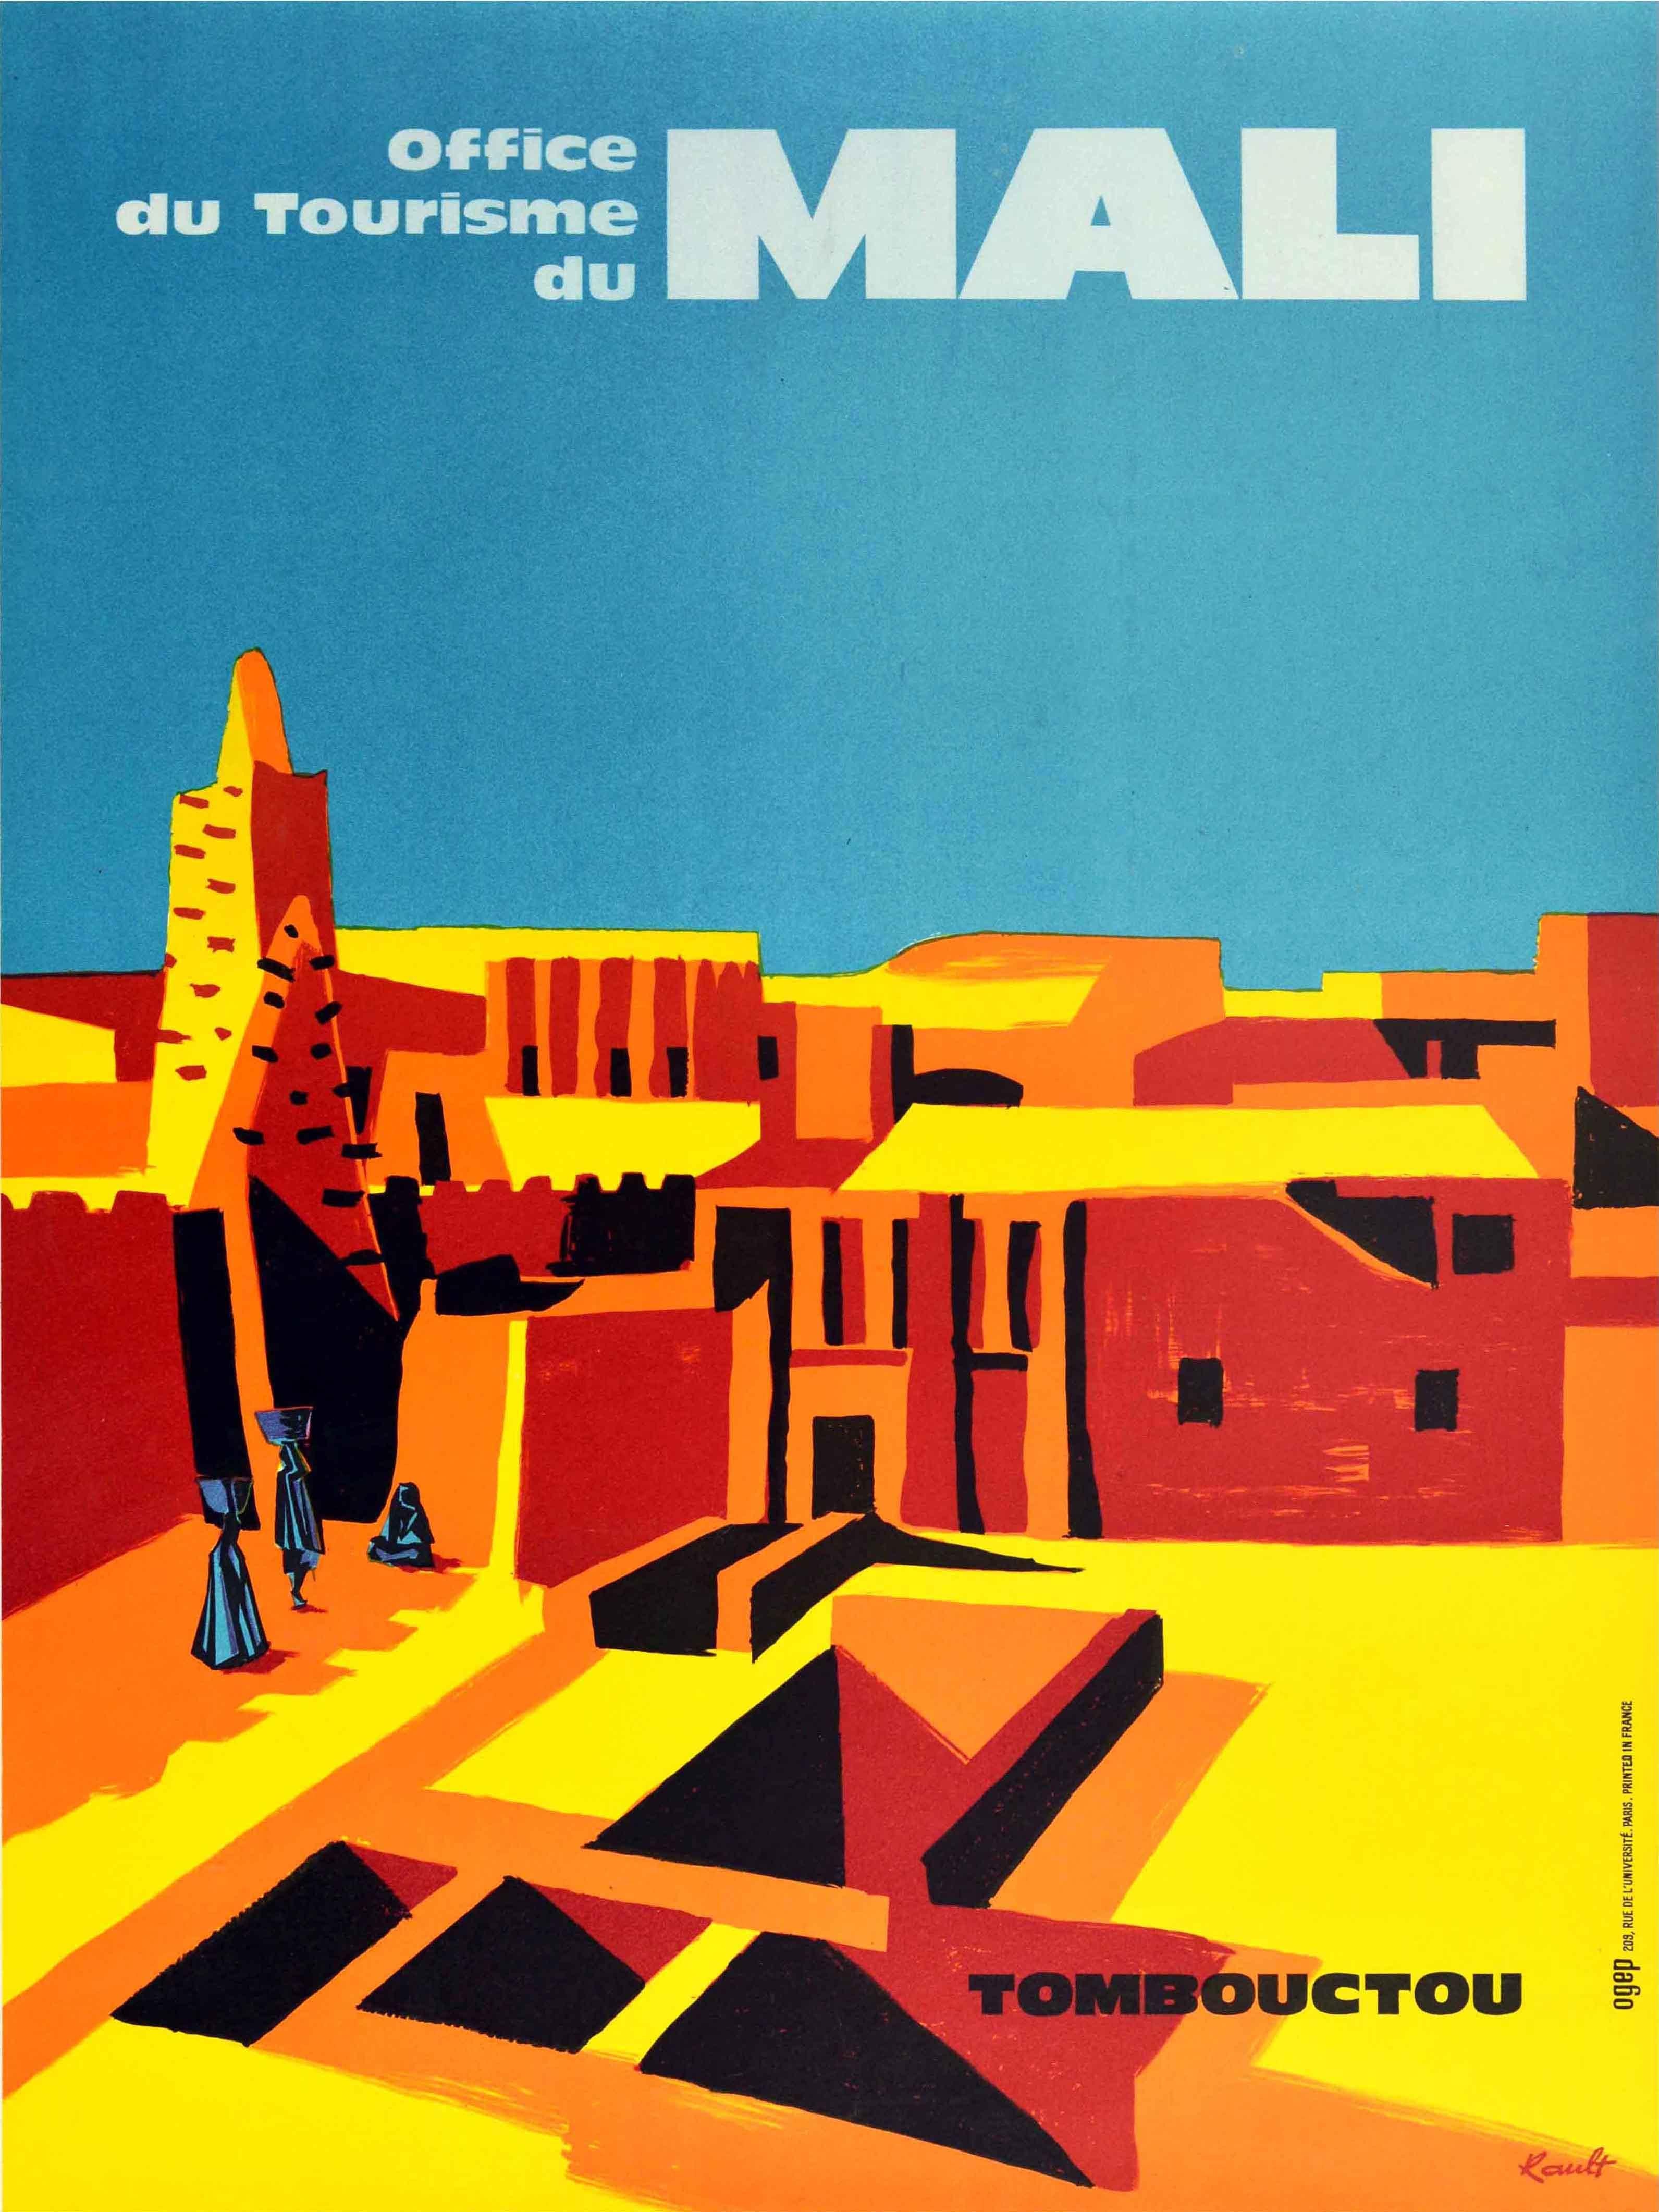 Rault Print - Original Vintage Travel Poster Mali Tombouctou West Africa Tourism Timbuktu City